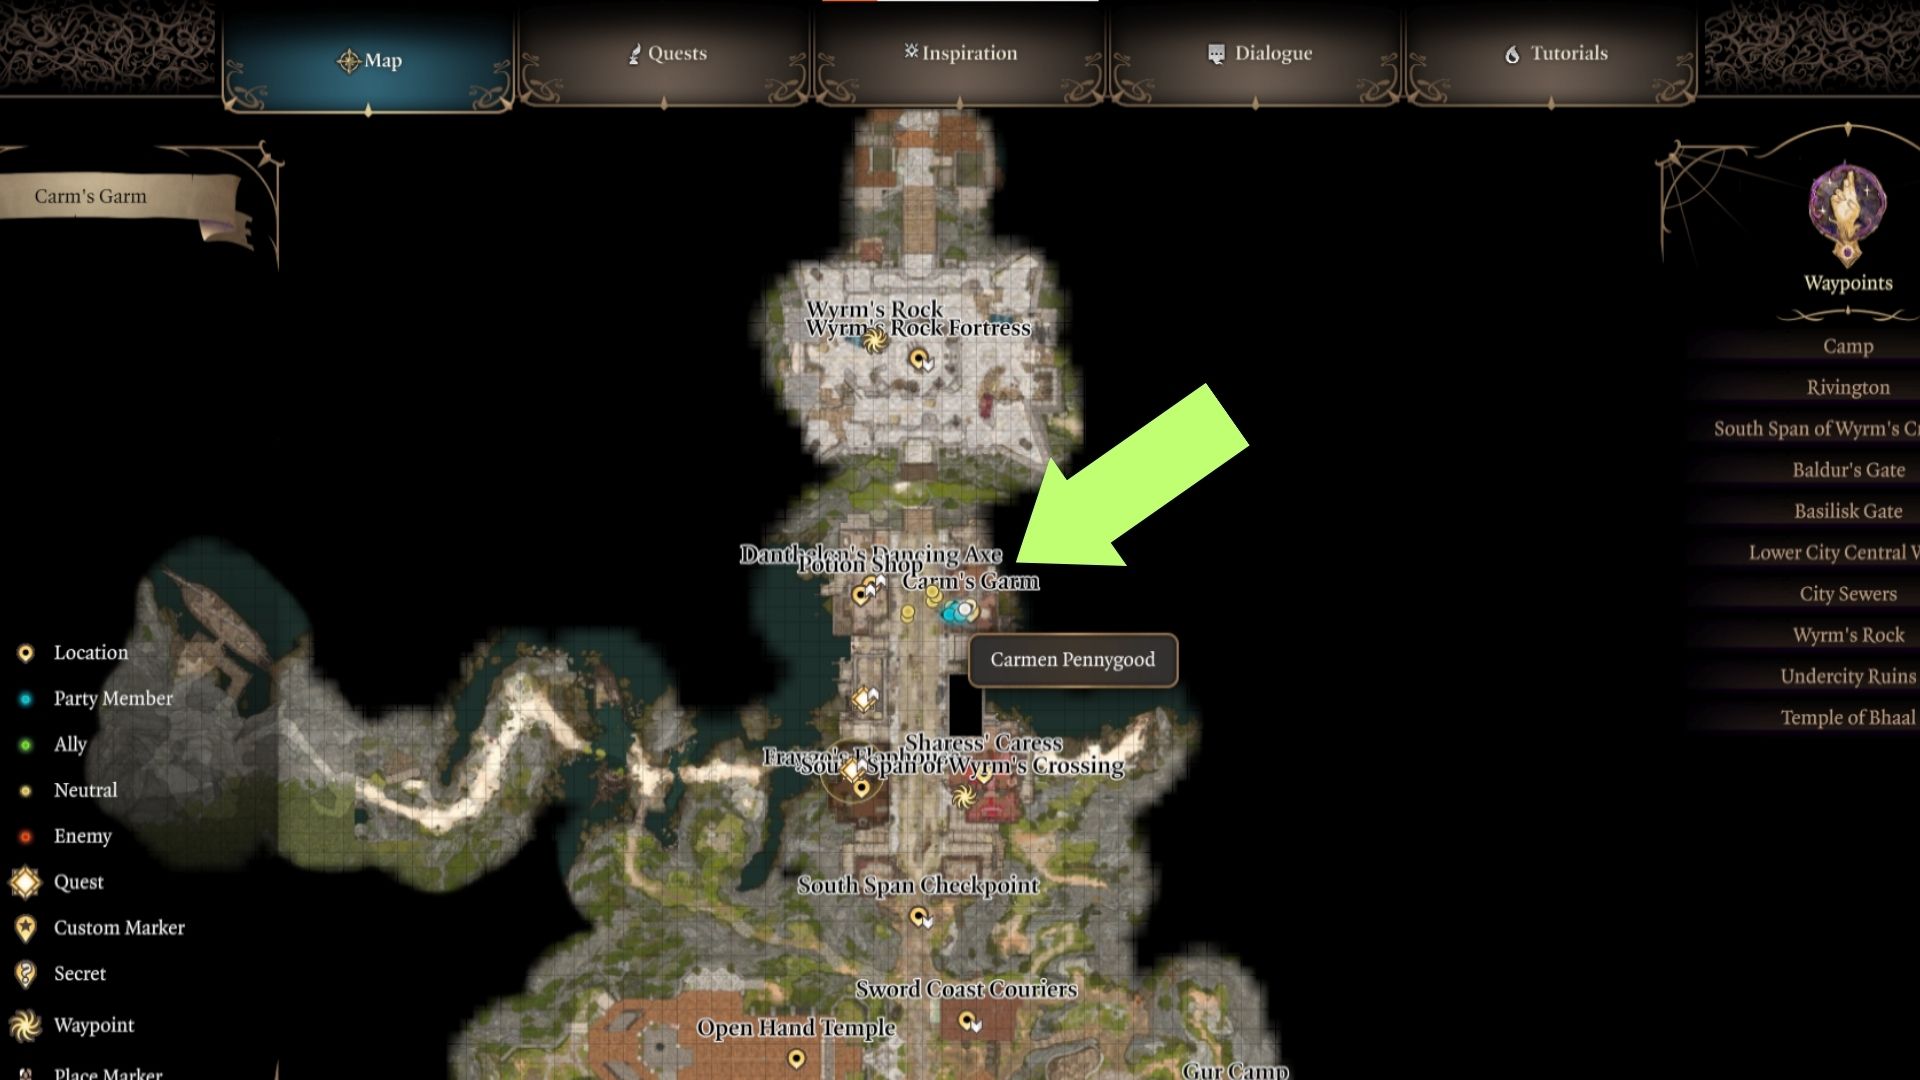 A screenshot of Carm's Garm's map location in Baldur's Gate 3. 